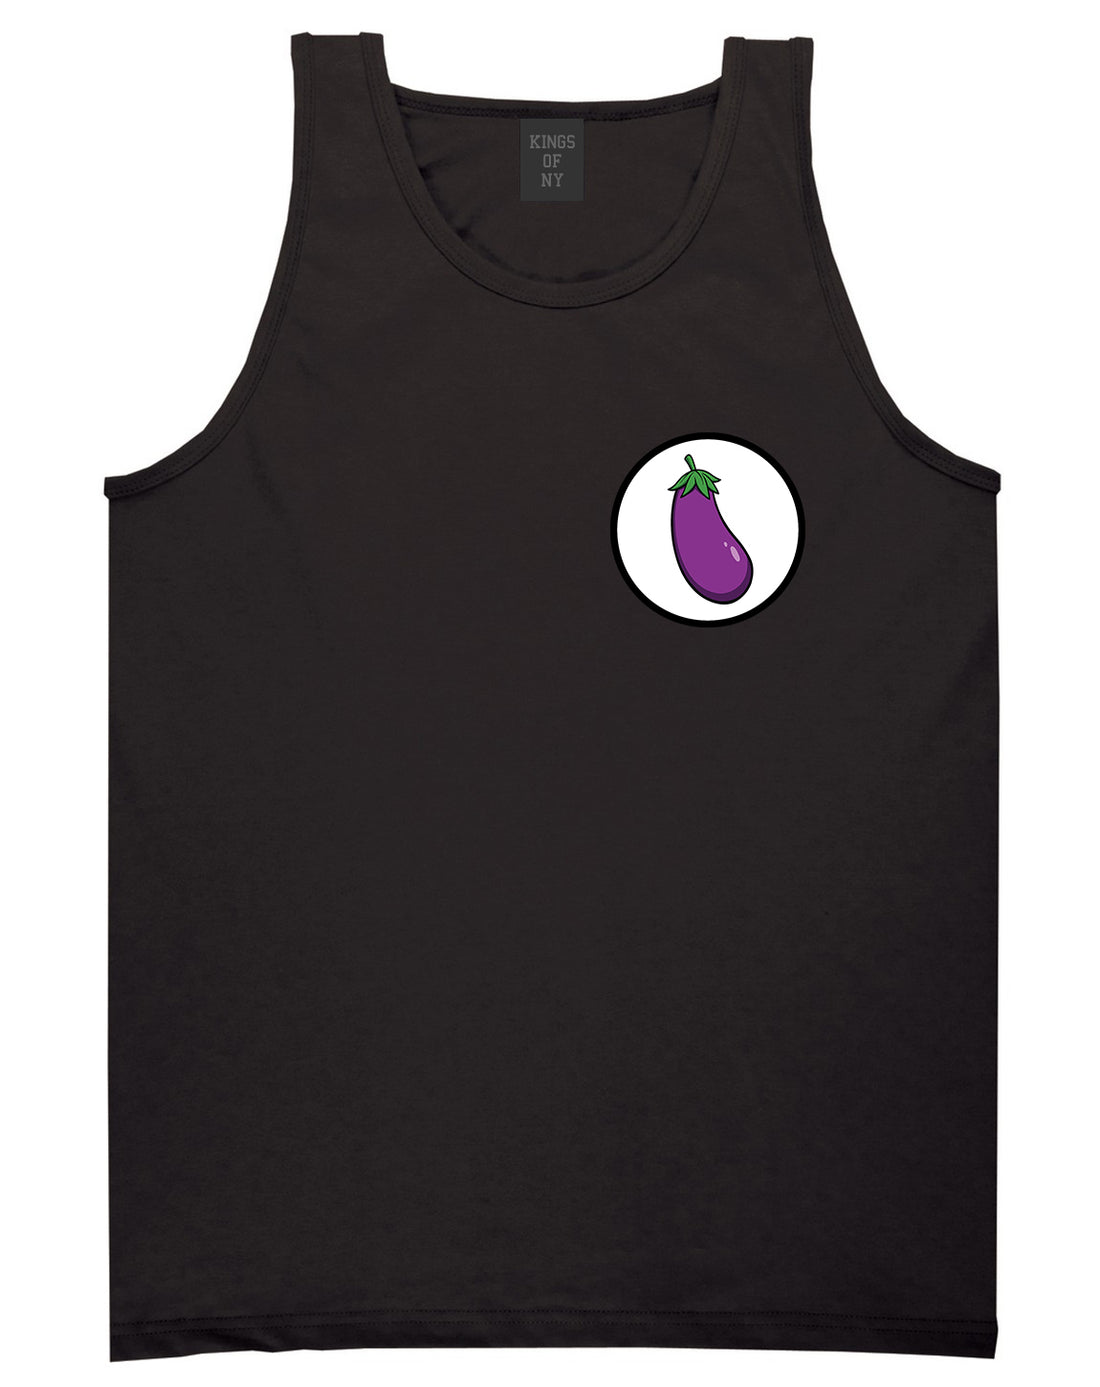 Eggplant_Emoji_Chest Mens Black Tank Top Shirt by Kings Of NY